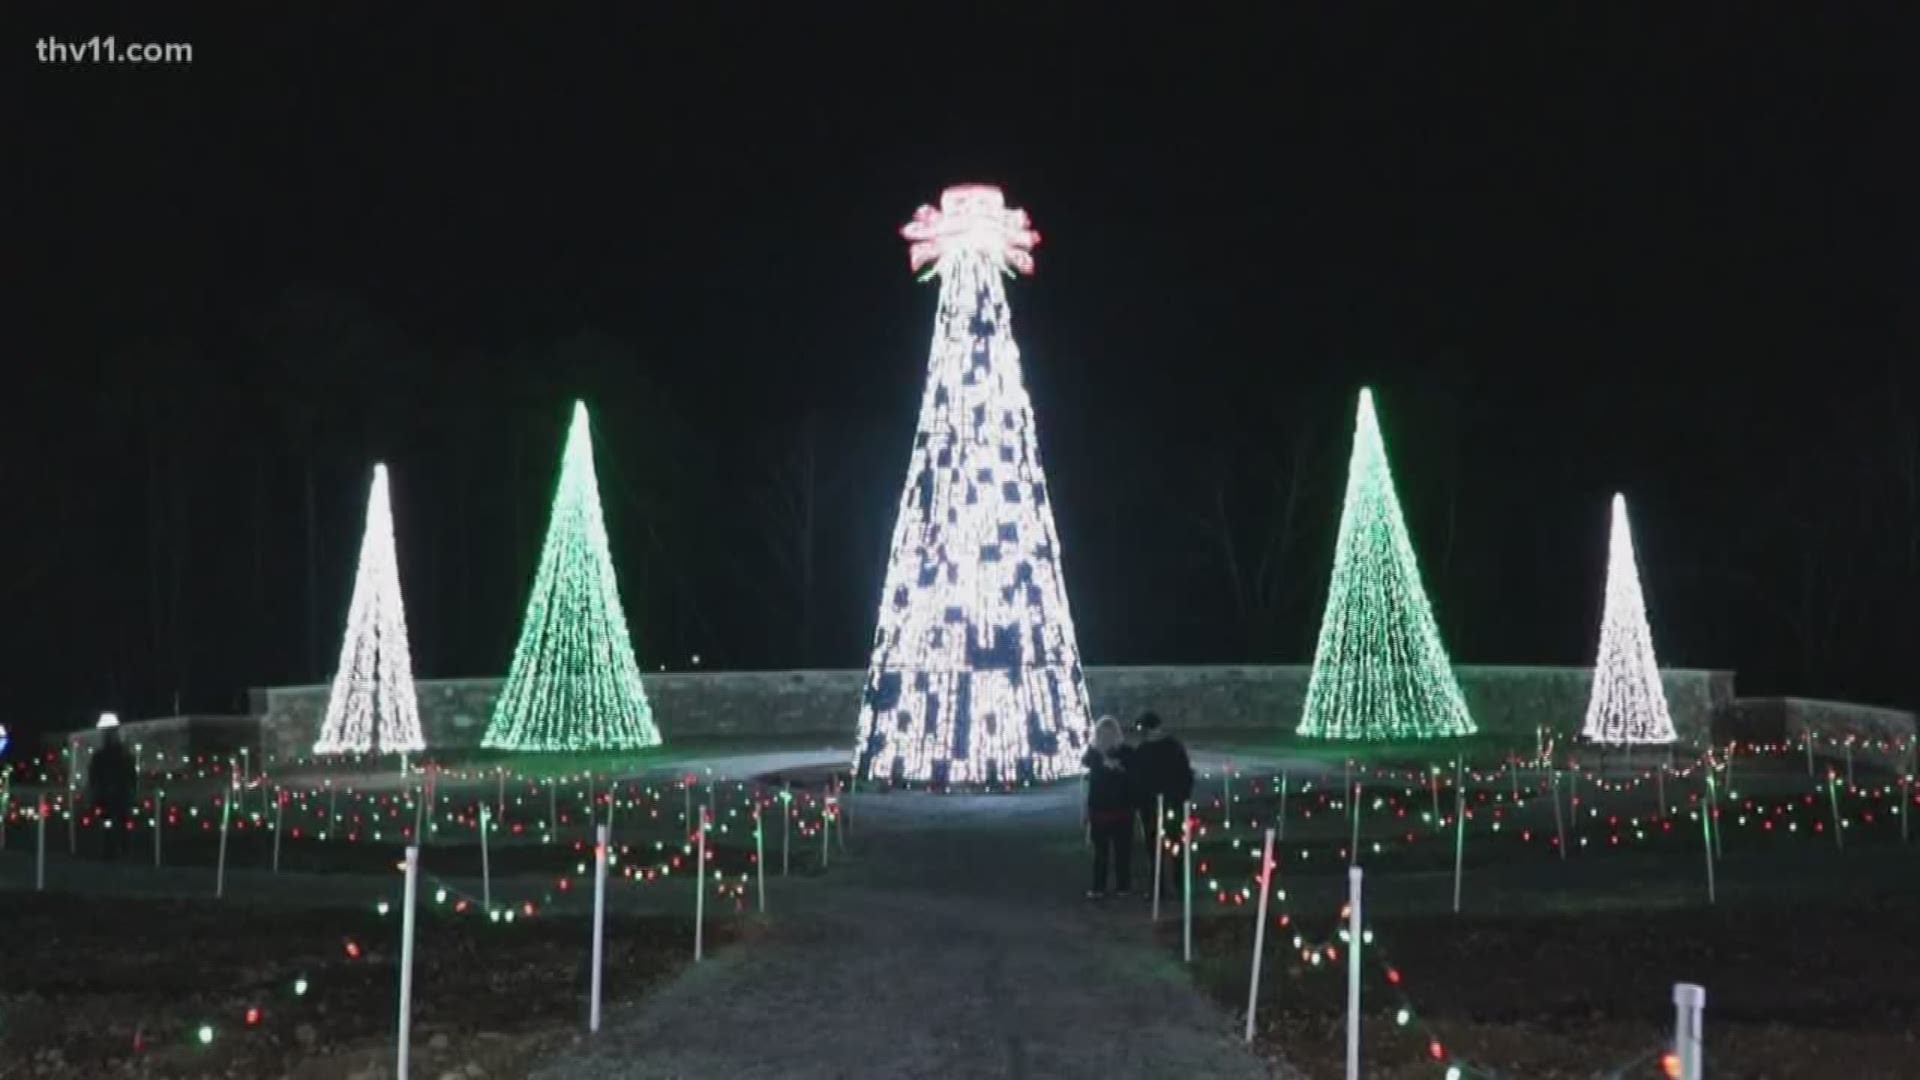 18th Annual Garvan Woodland Gardens Holiday Lights 2019 will run through December 31.